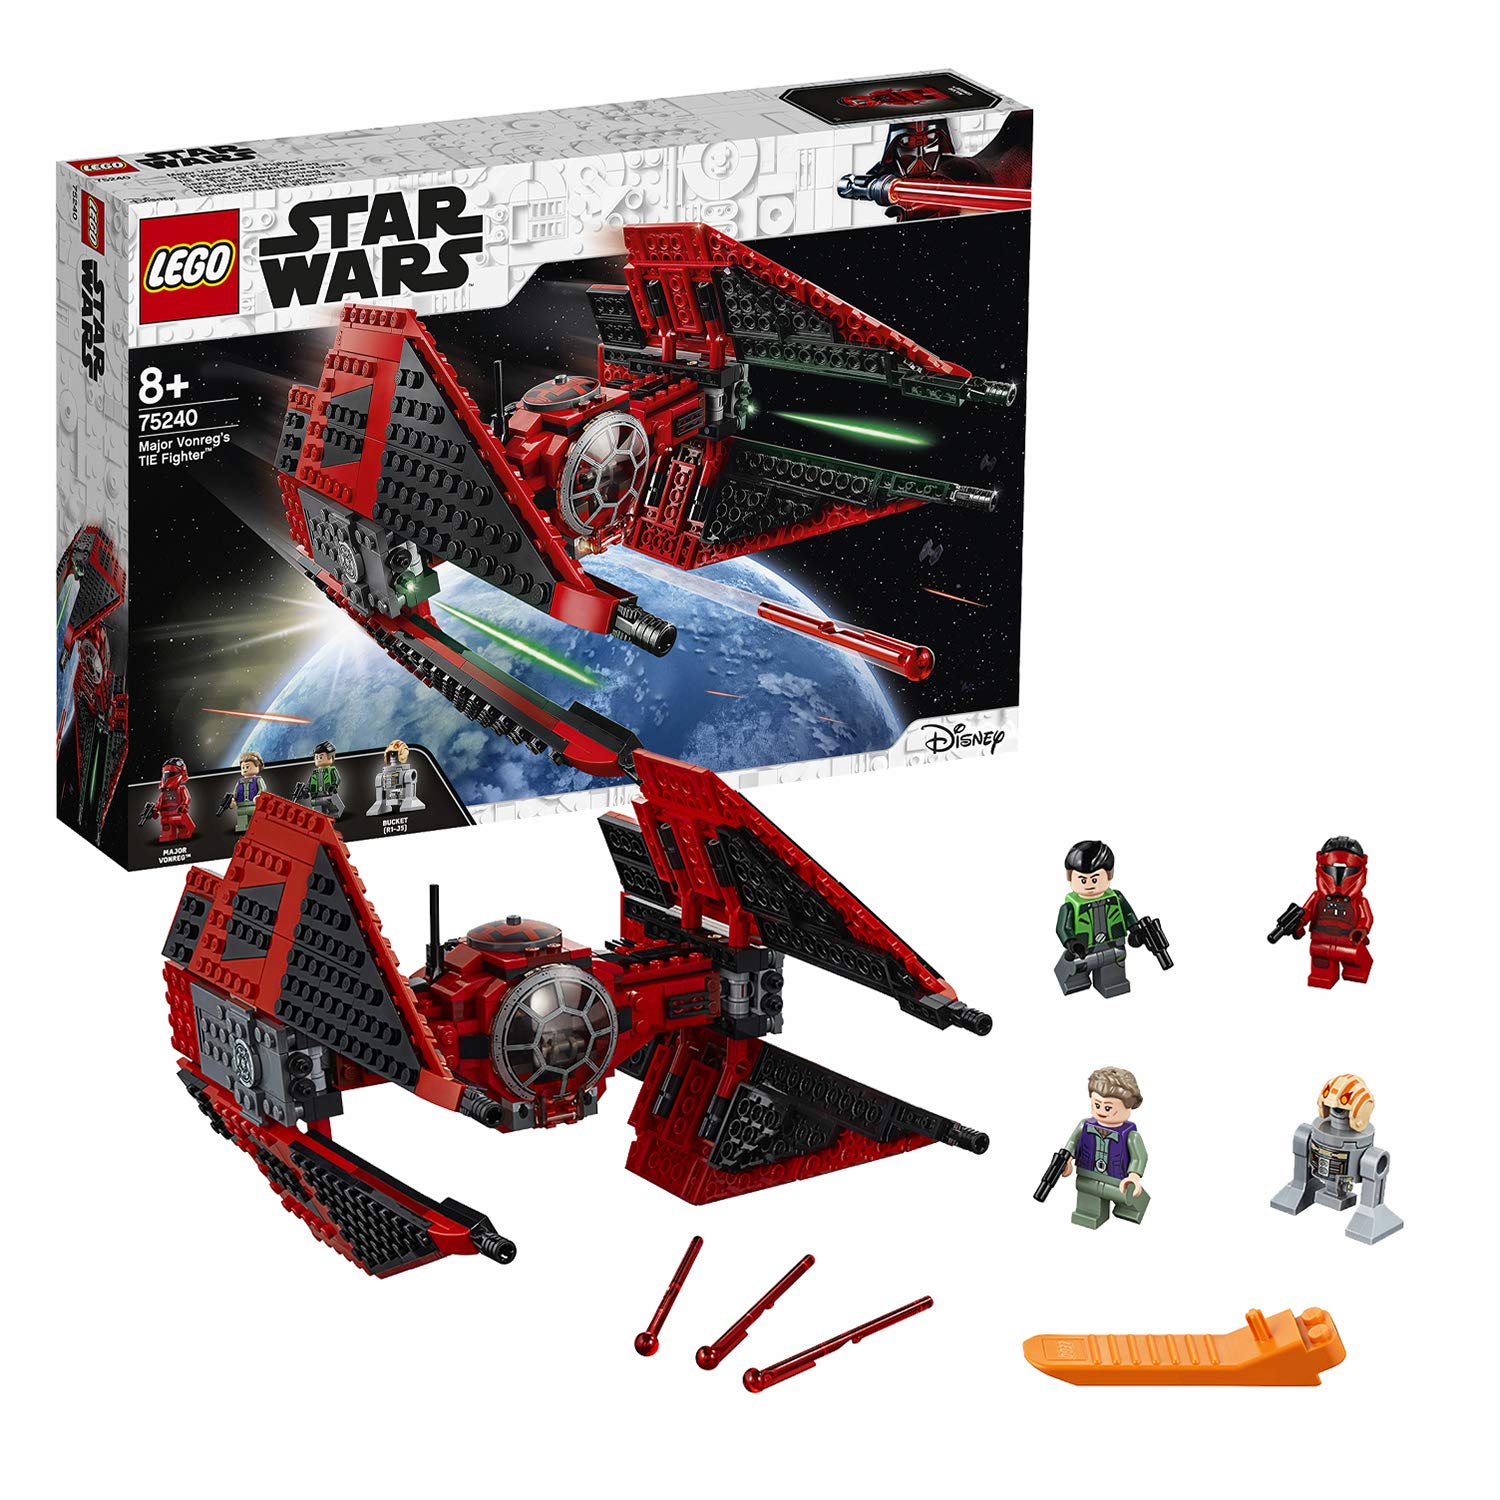 LEGO Star Wars 75240 Resistance Major Vonreg's Tie-Fighter, Construction Ki